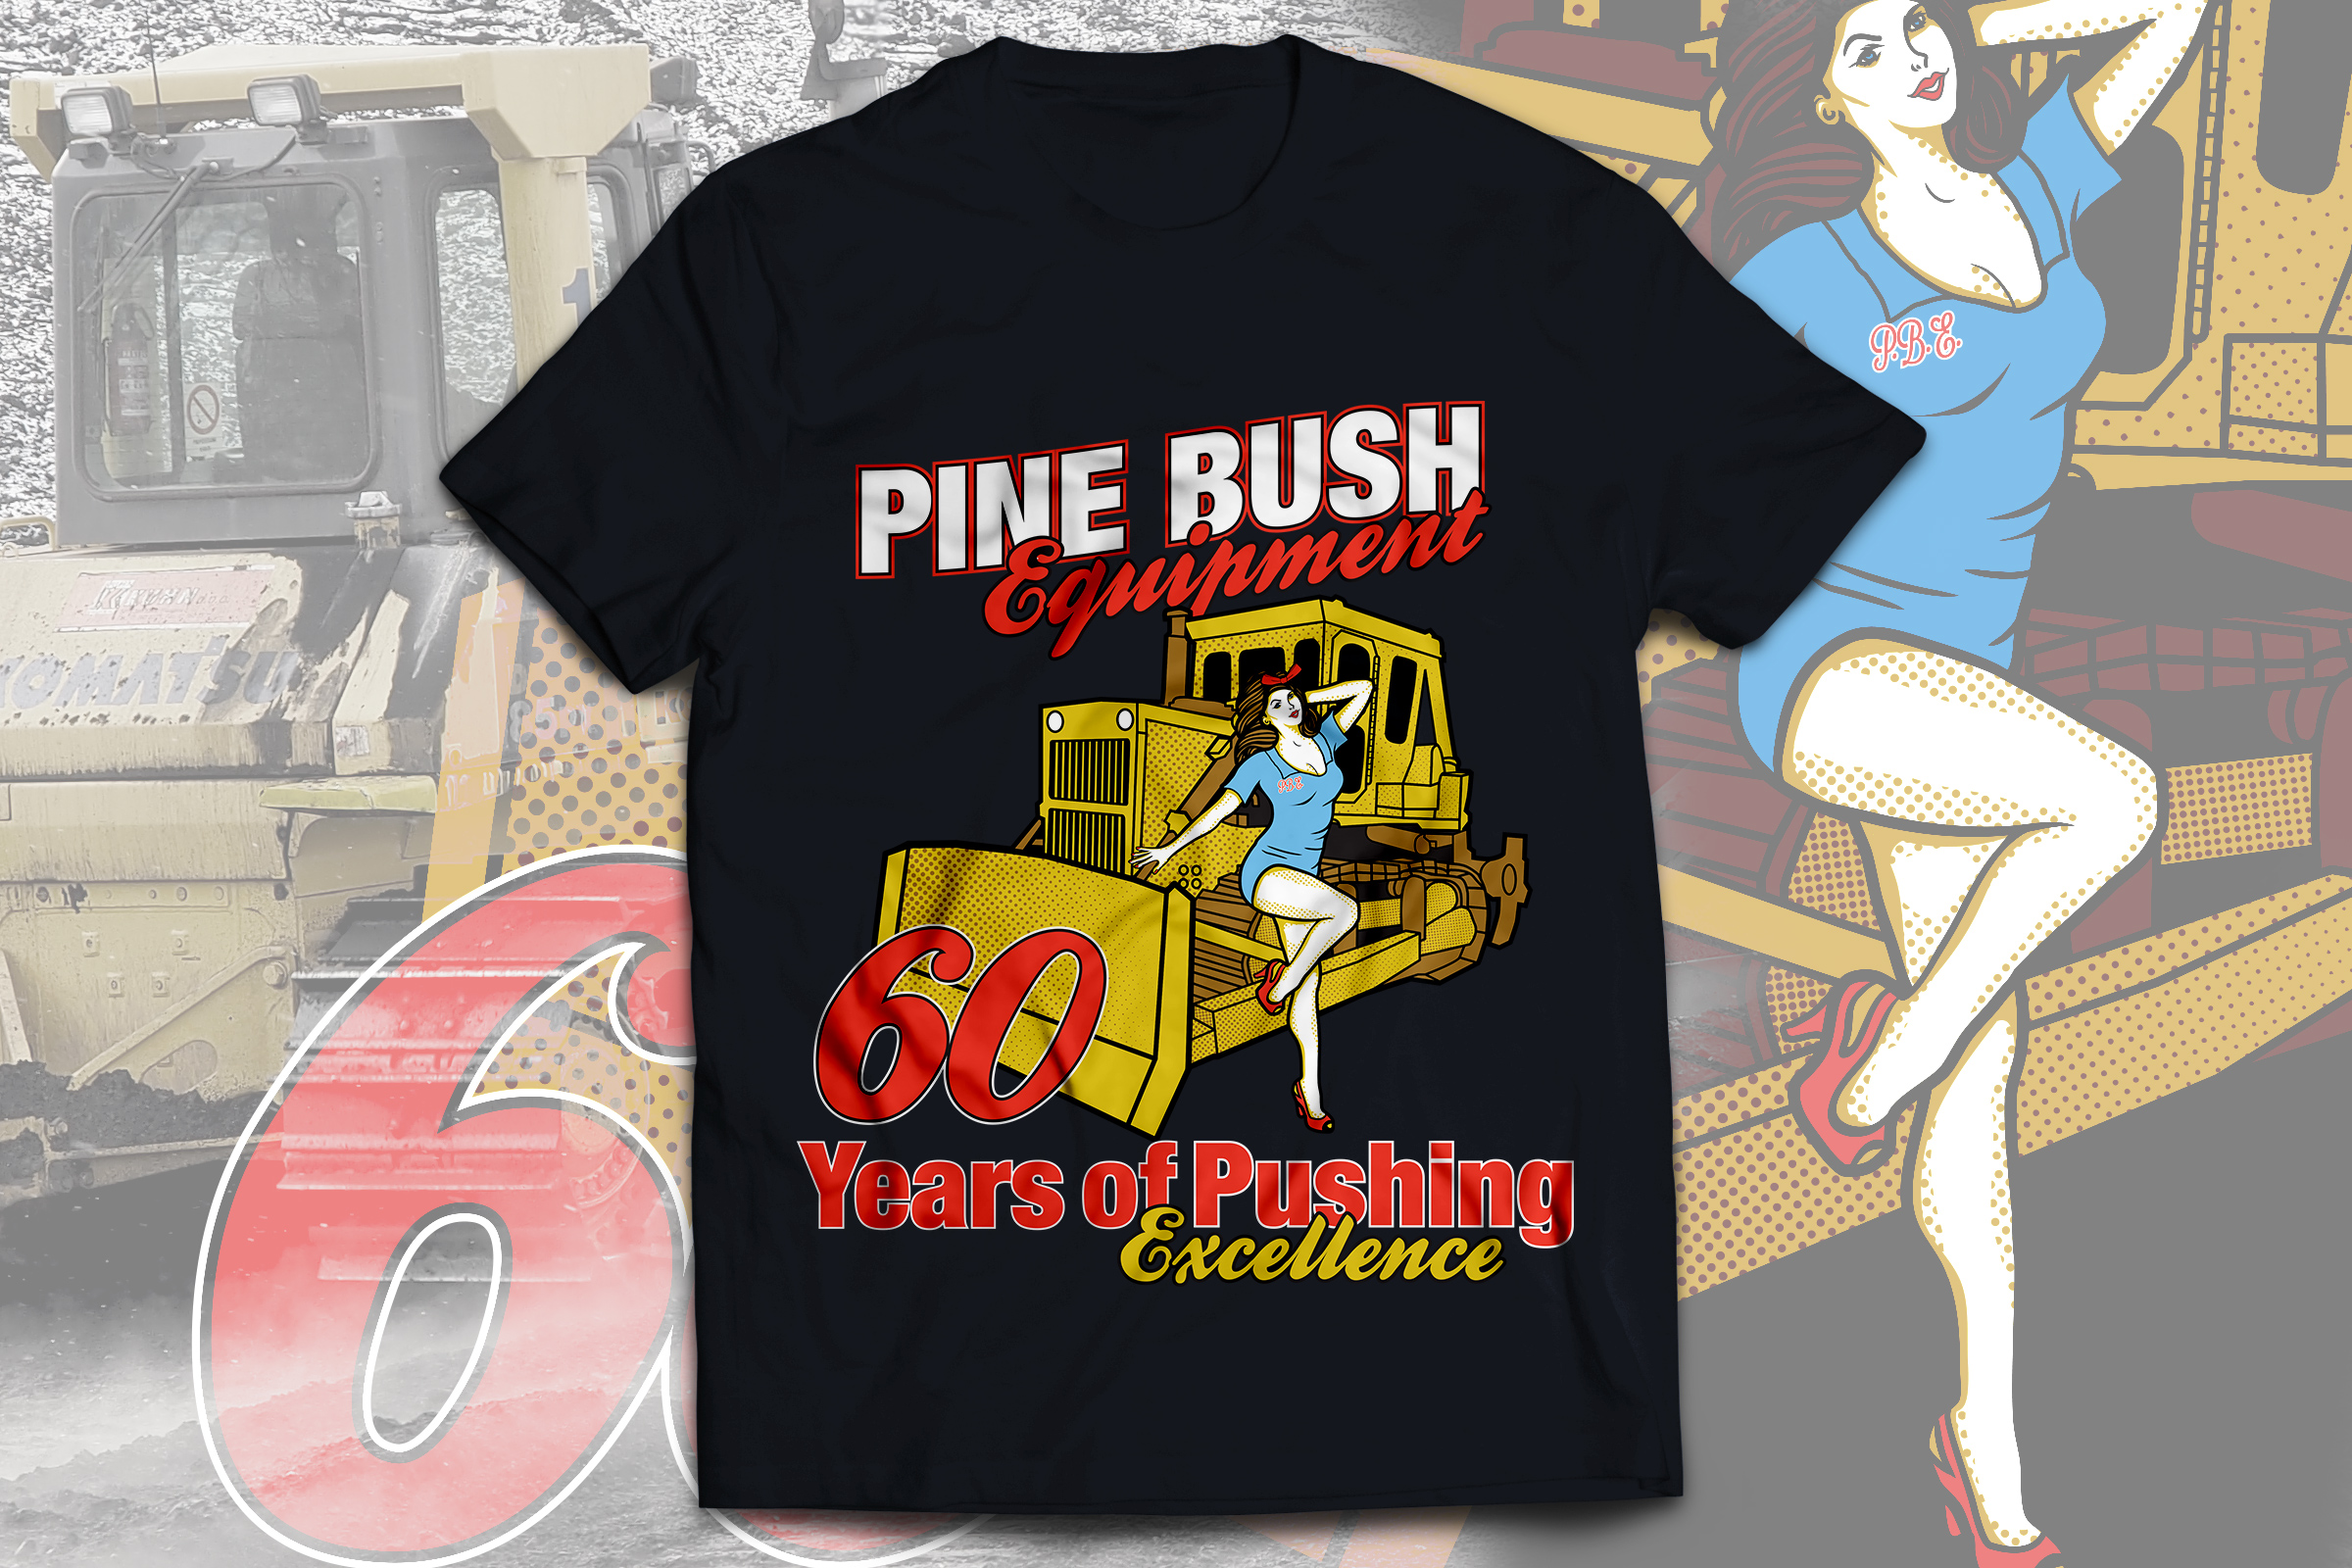 Pine Bush Equipment T-Shirt